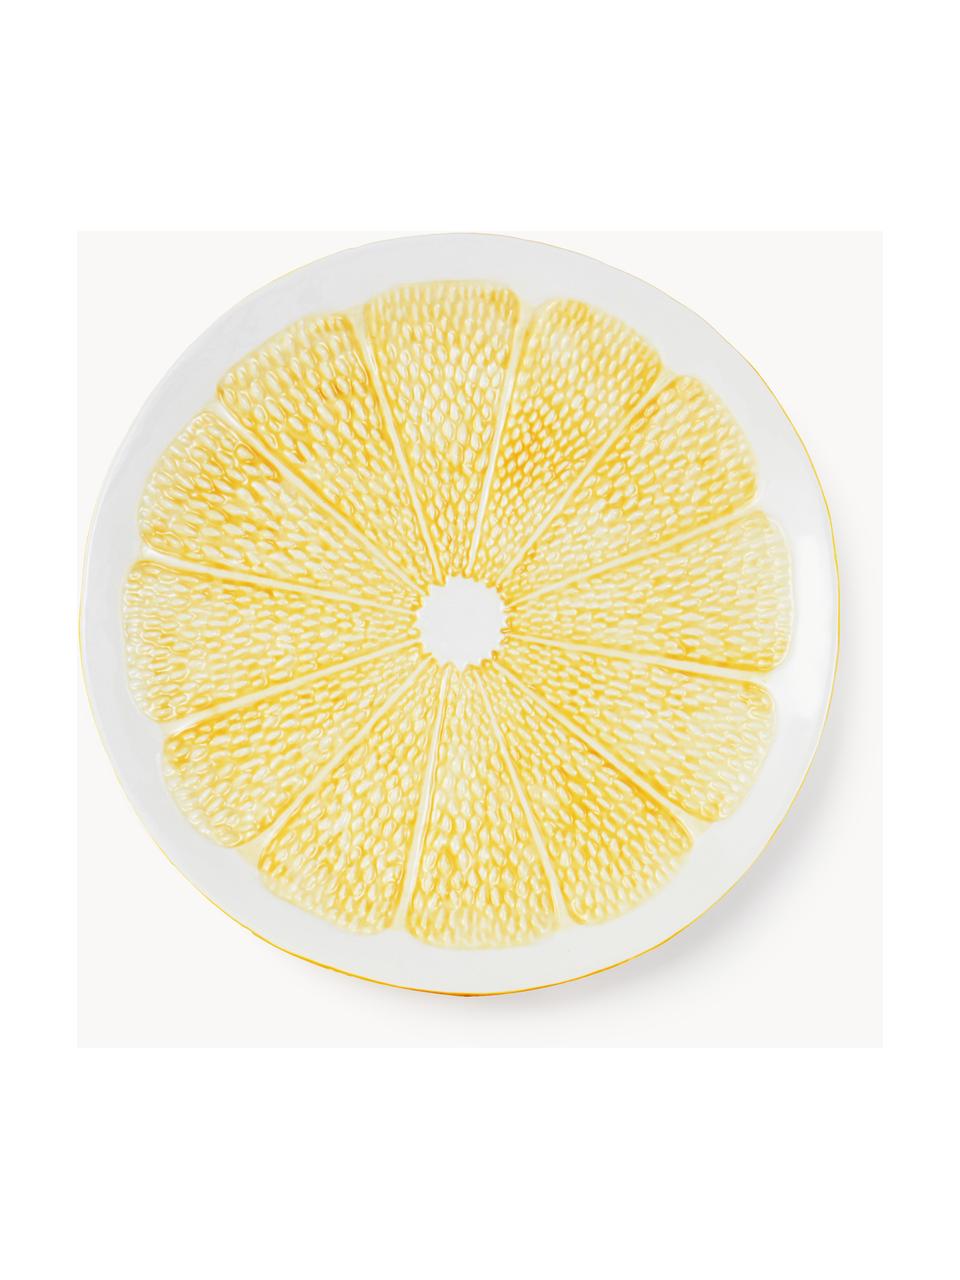 Speiseteller Lemon, 4 Stück, Keramik, Hellgelb, Weiss, Ø 27 cm